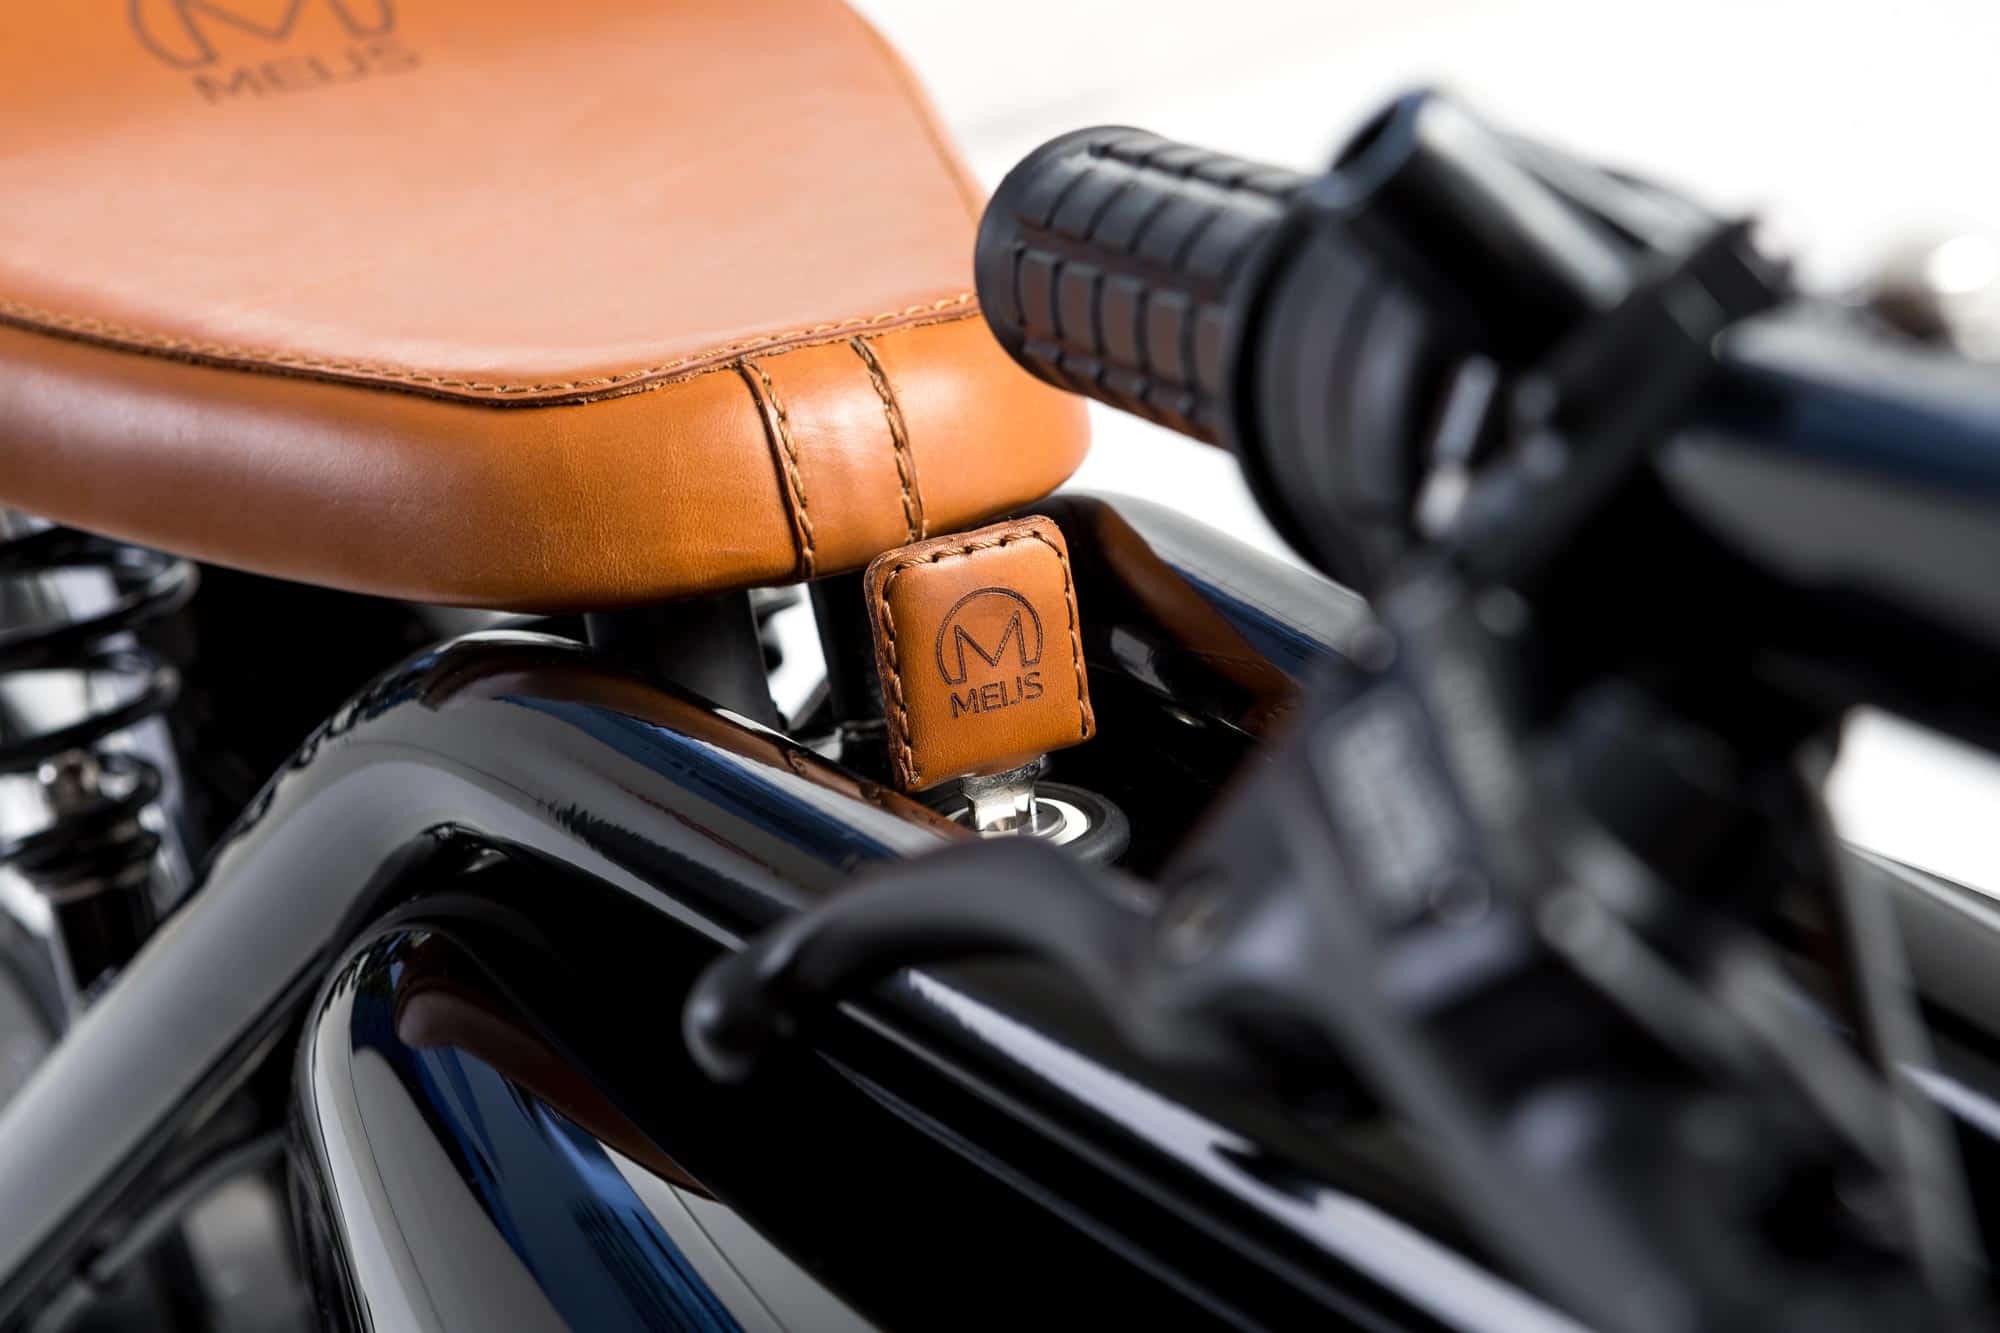 Meijs Motorman saddle and key - Rene Verkaart)